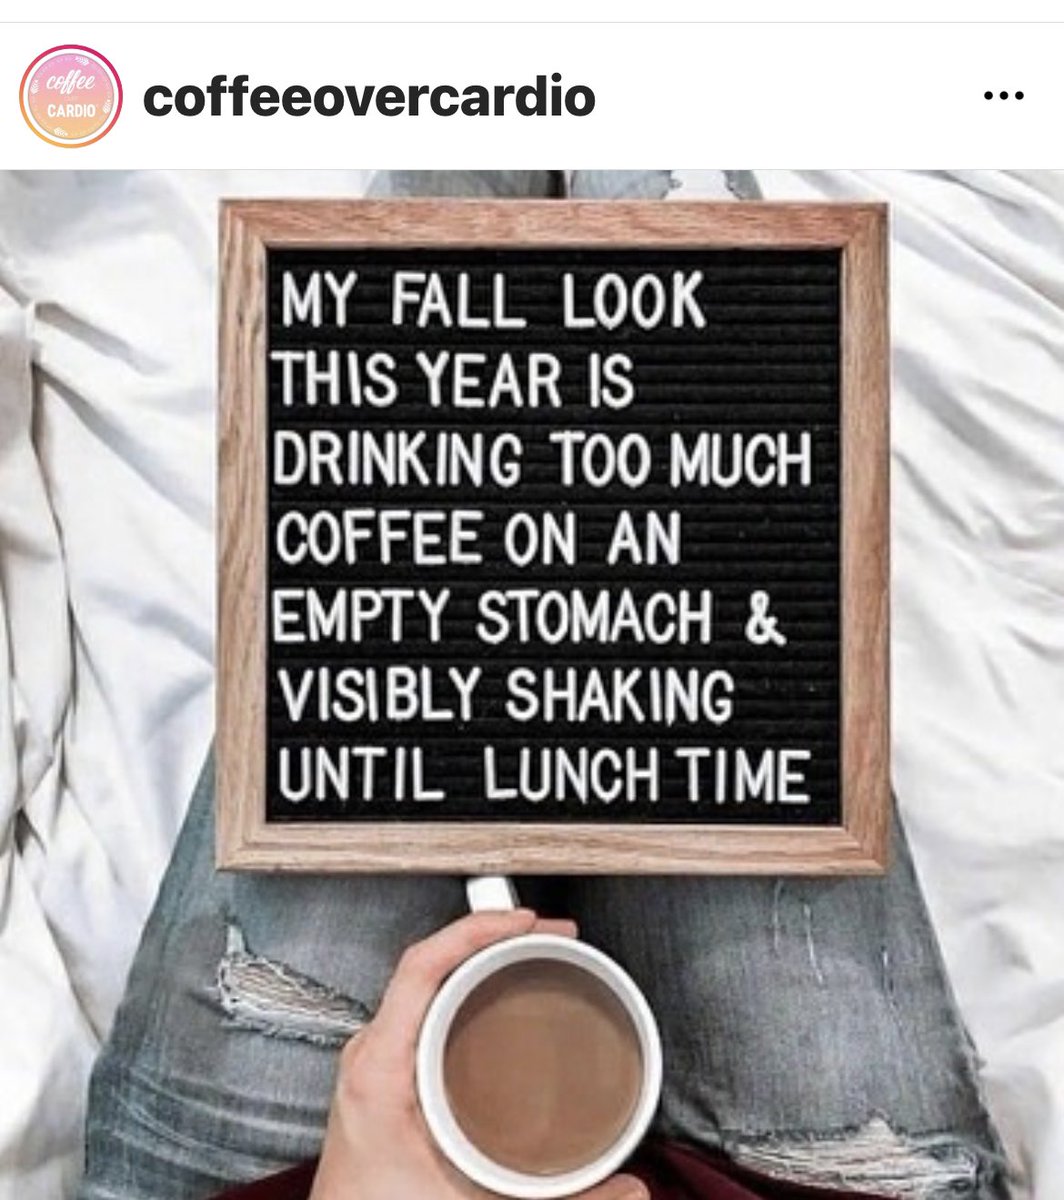 Coffee over cardio barista babe